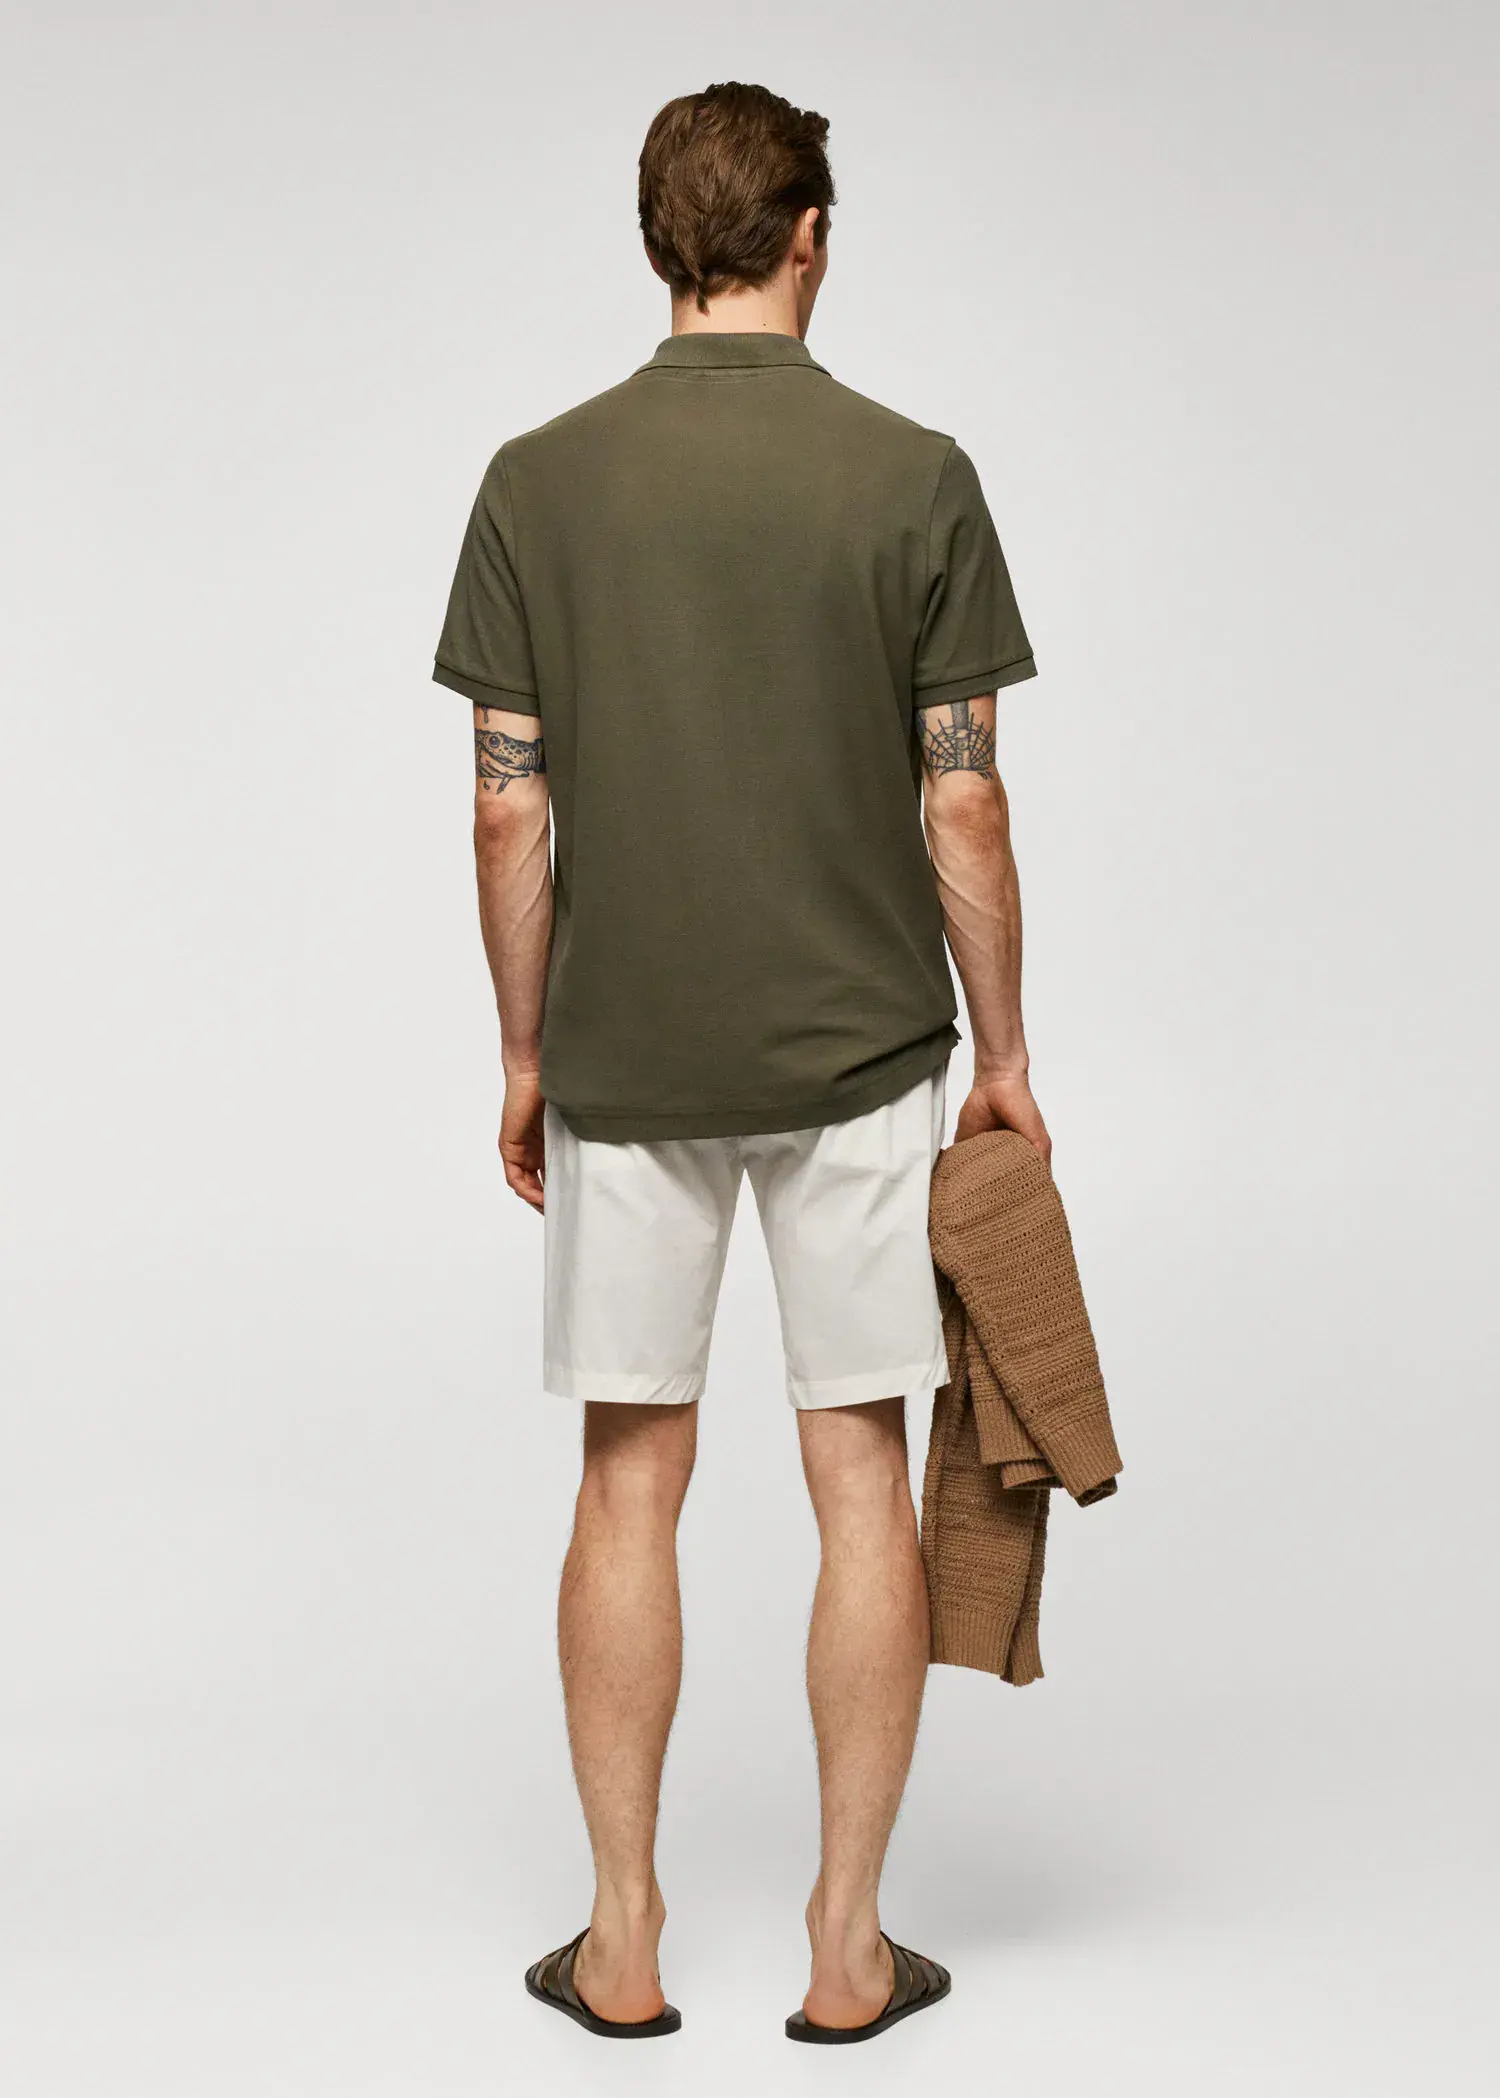 Mango 100% cotton pique polo shirt. a man in a green shirt and white shorts. 